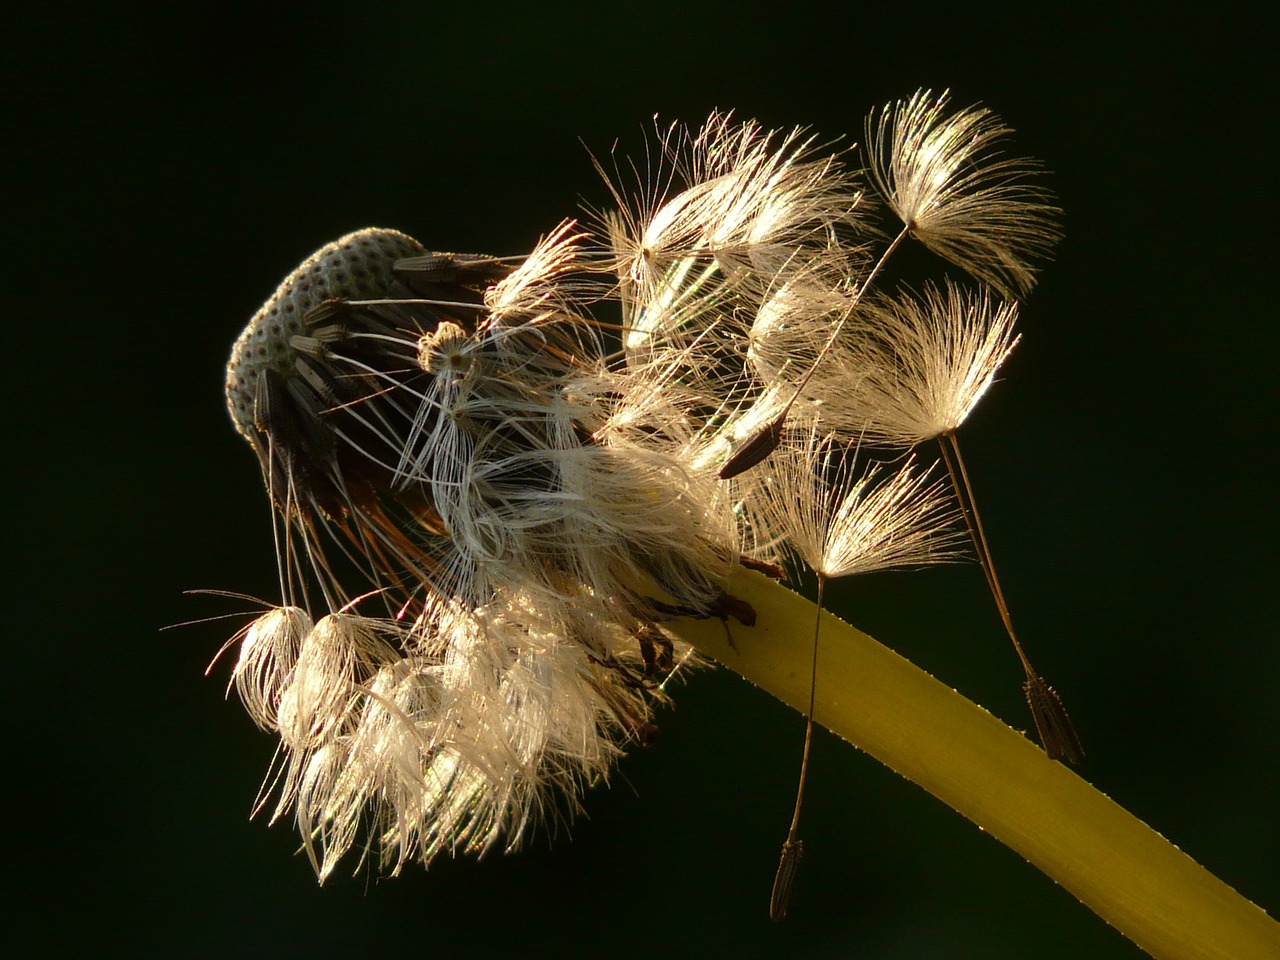 a close up of a flower on a stem, by Jan Rustem, flickr, hurufiyya, backlit fur, hay, cubensis, glowing dandelion seed storm